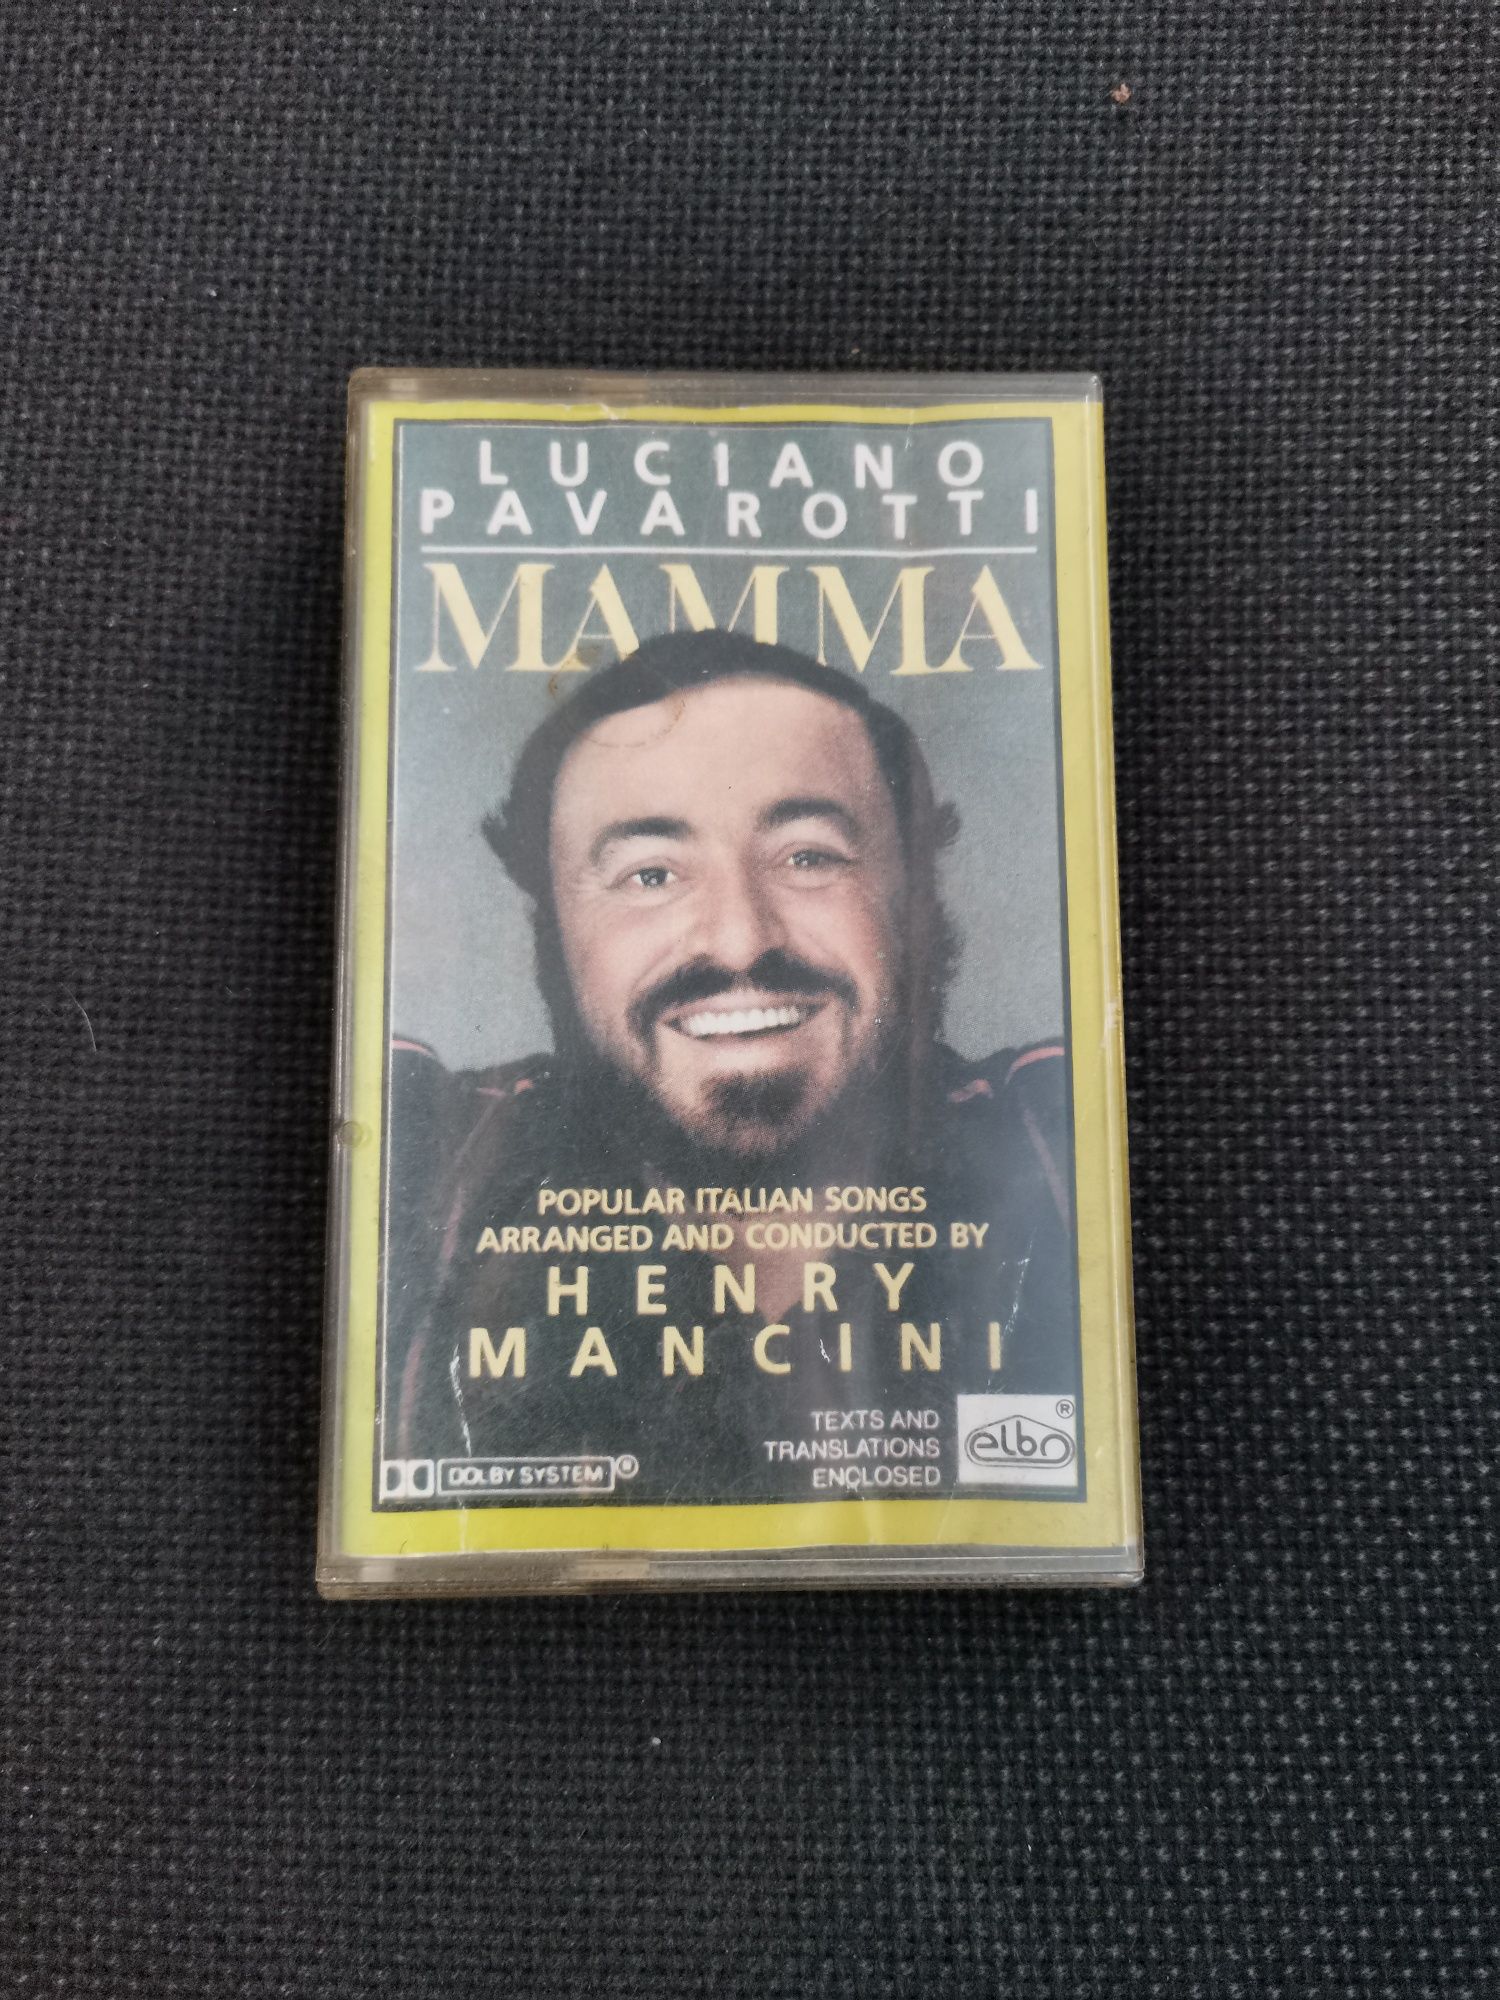 caseta audio Luciano Pavarotti "Mamma"